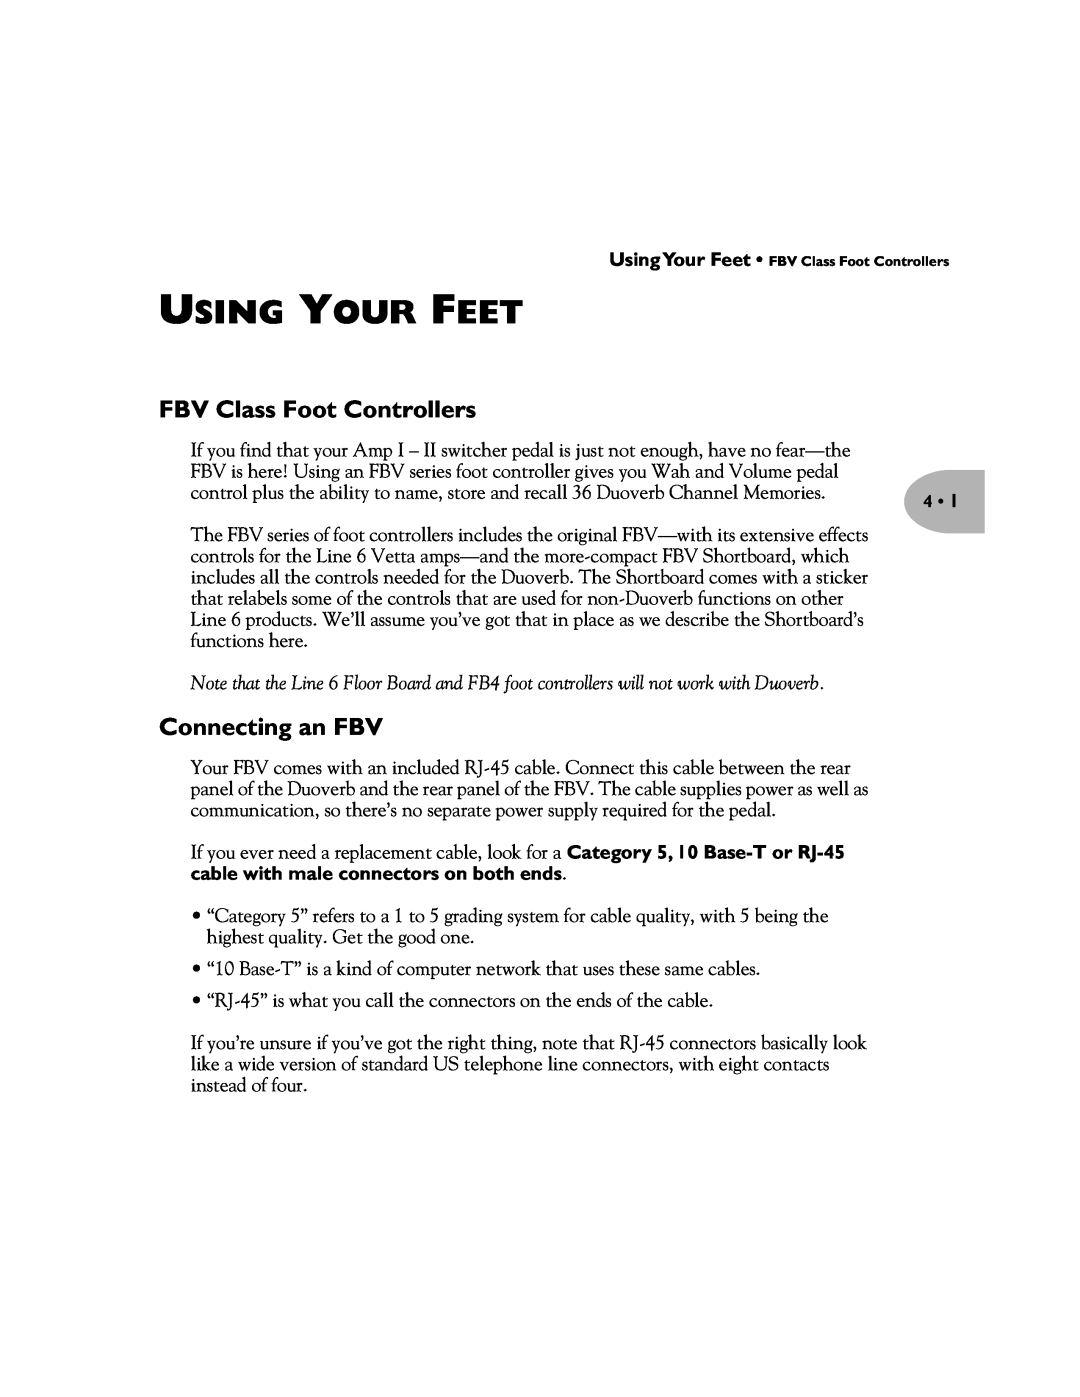 Line 6 Pilot's Handbook manual Using Your Feet, FBV Class Foot Controllers, Connecting an FBV 